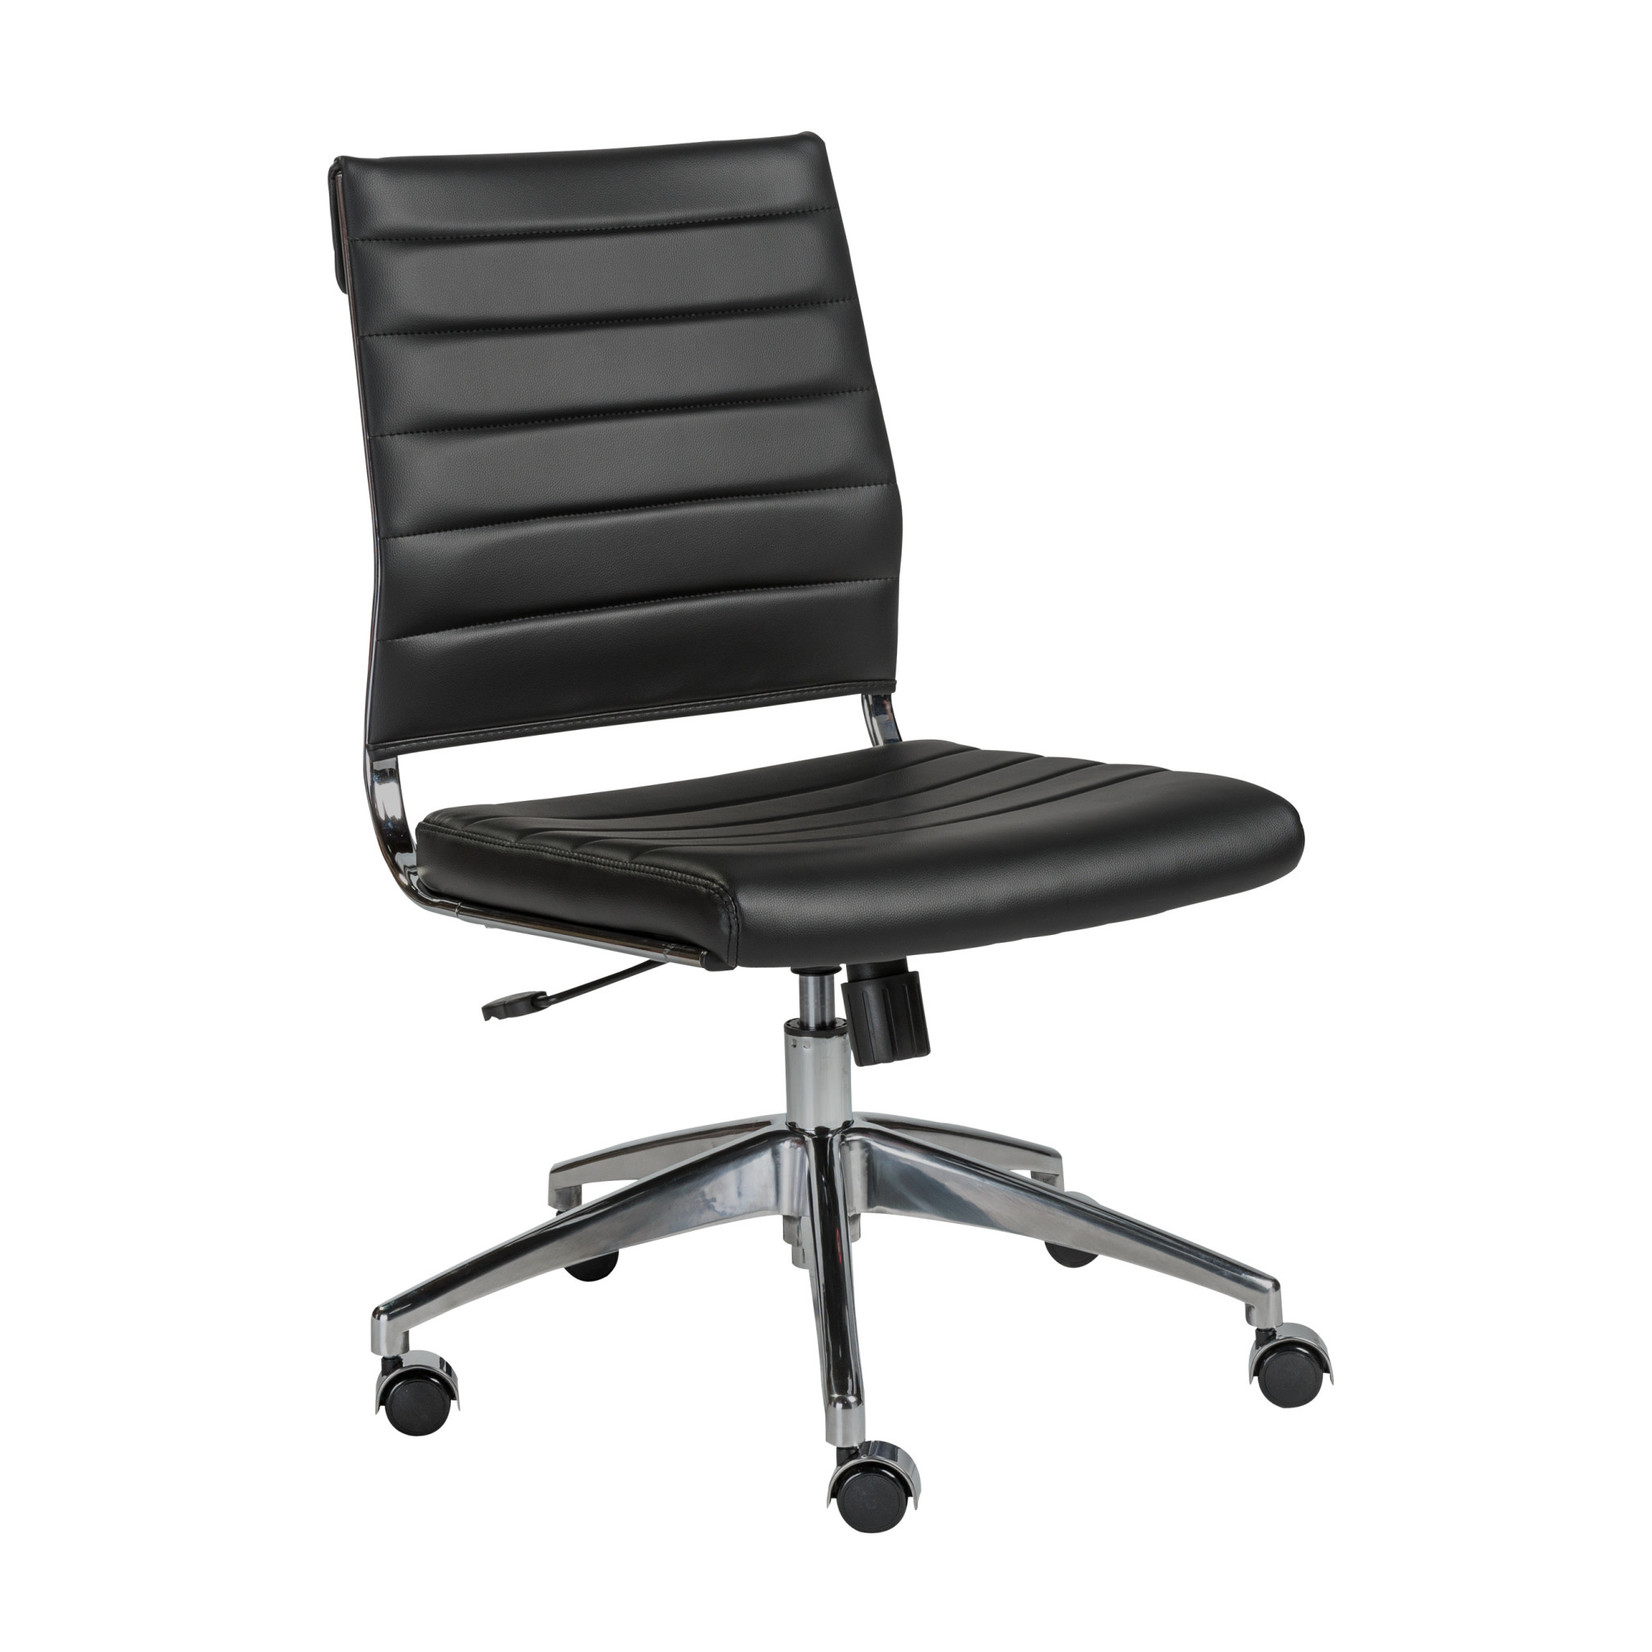 Axel LB Office Chair Black/Alum